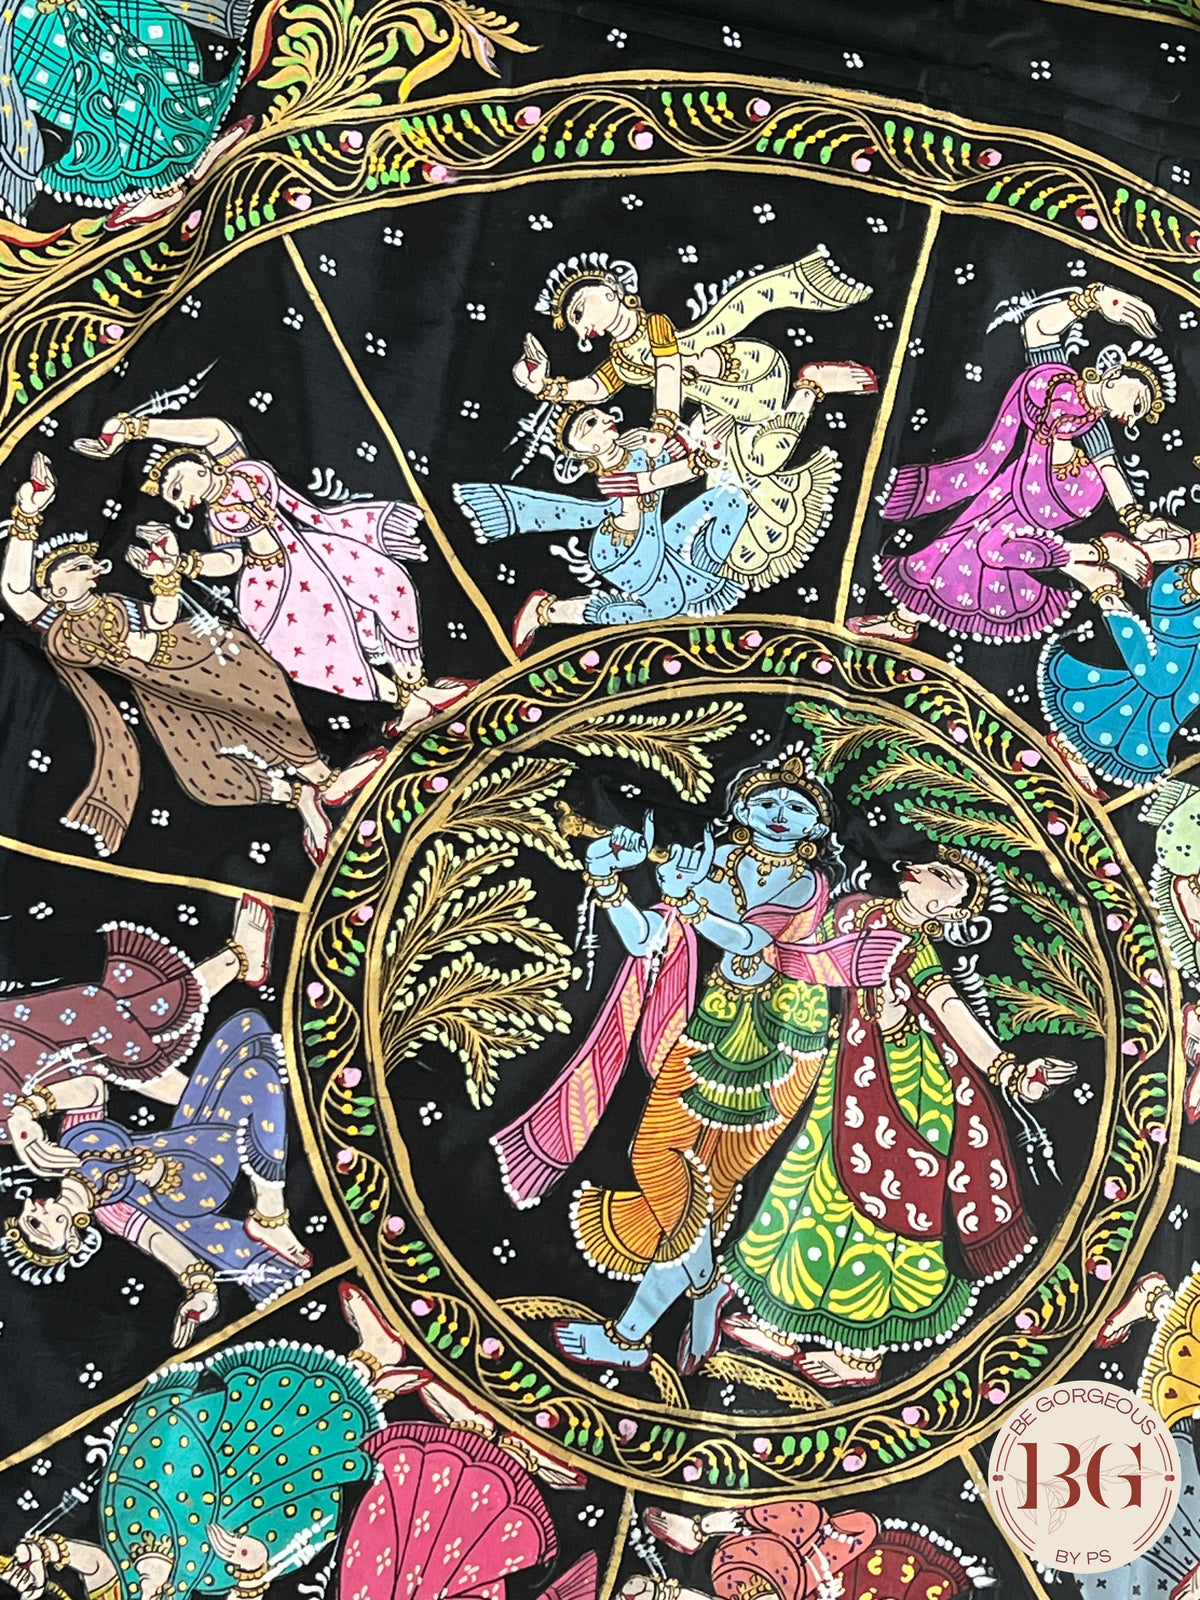 Pattachitra on Silk with Krishna dancing - Black